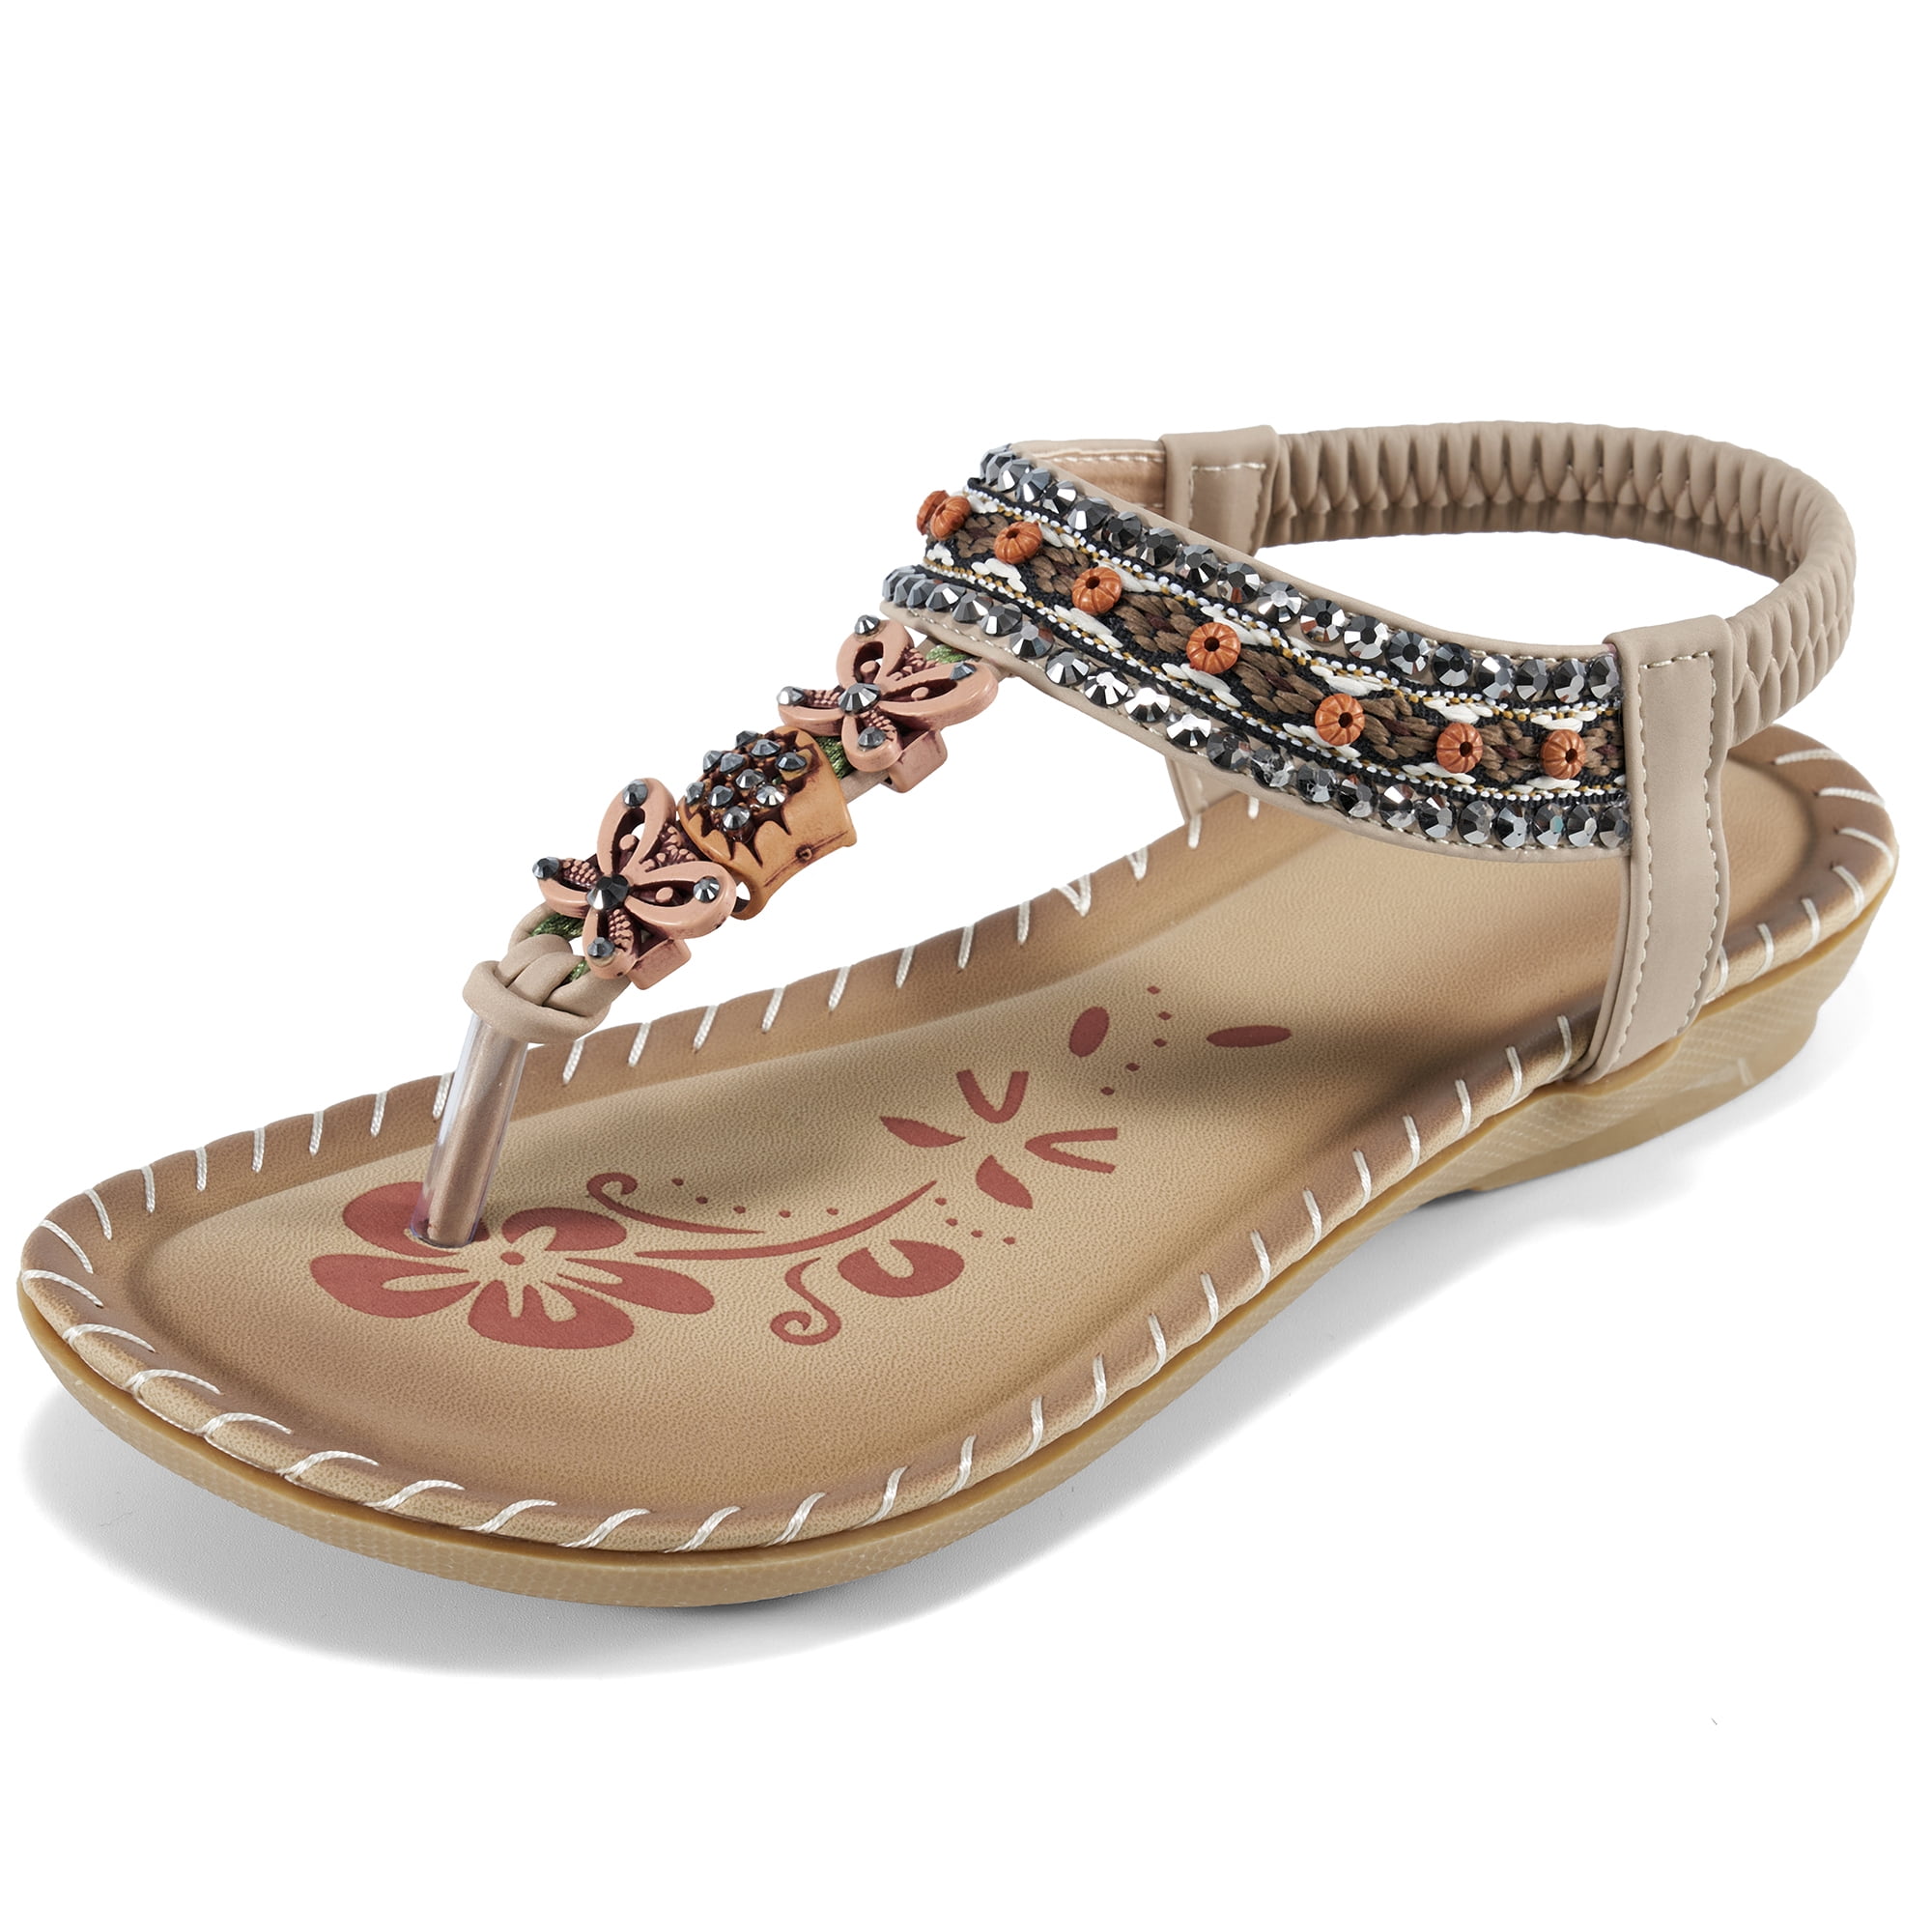 haoricu Womens Gladiator Roman Sandals Summer Casual Flat Beach Dress Flat Sheos Open Toe Vintage Flip Flops 